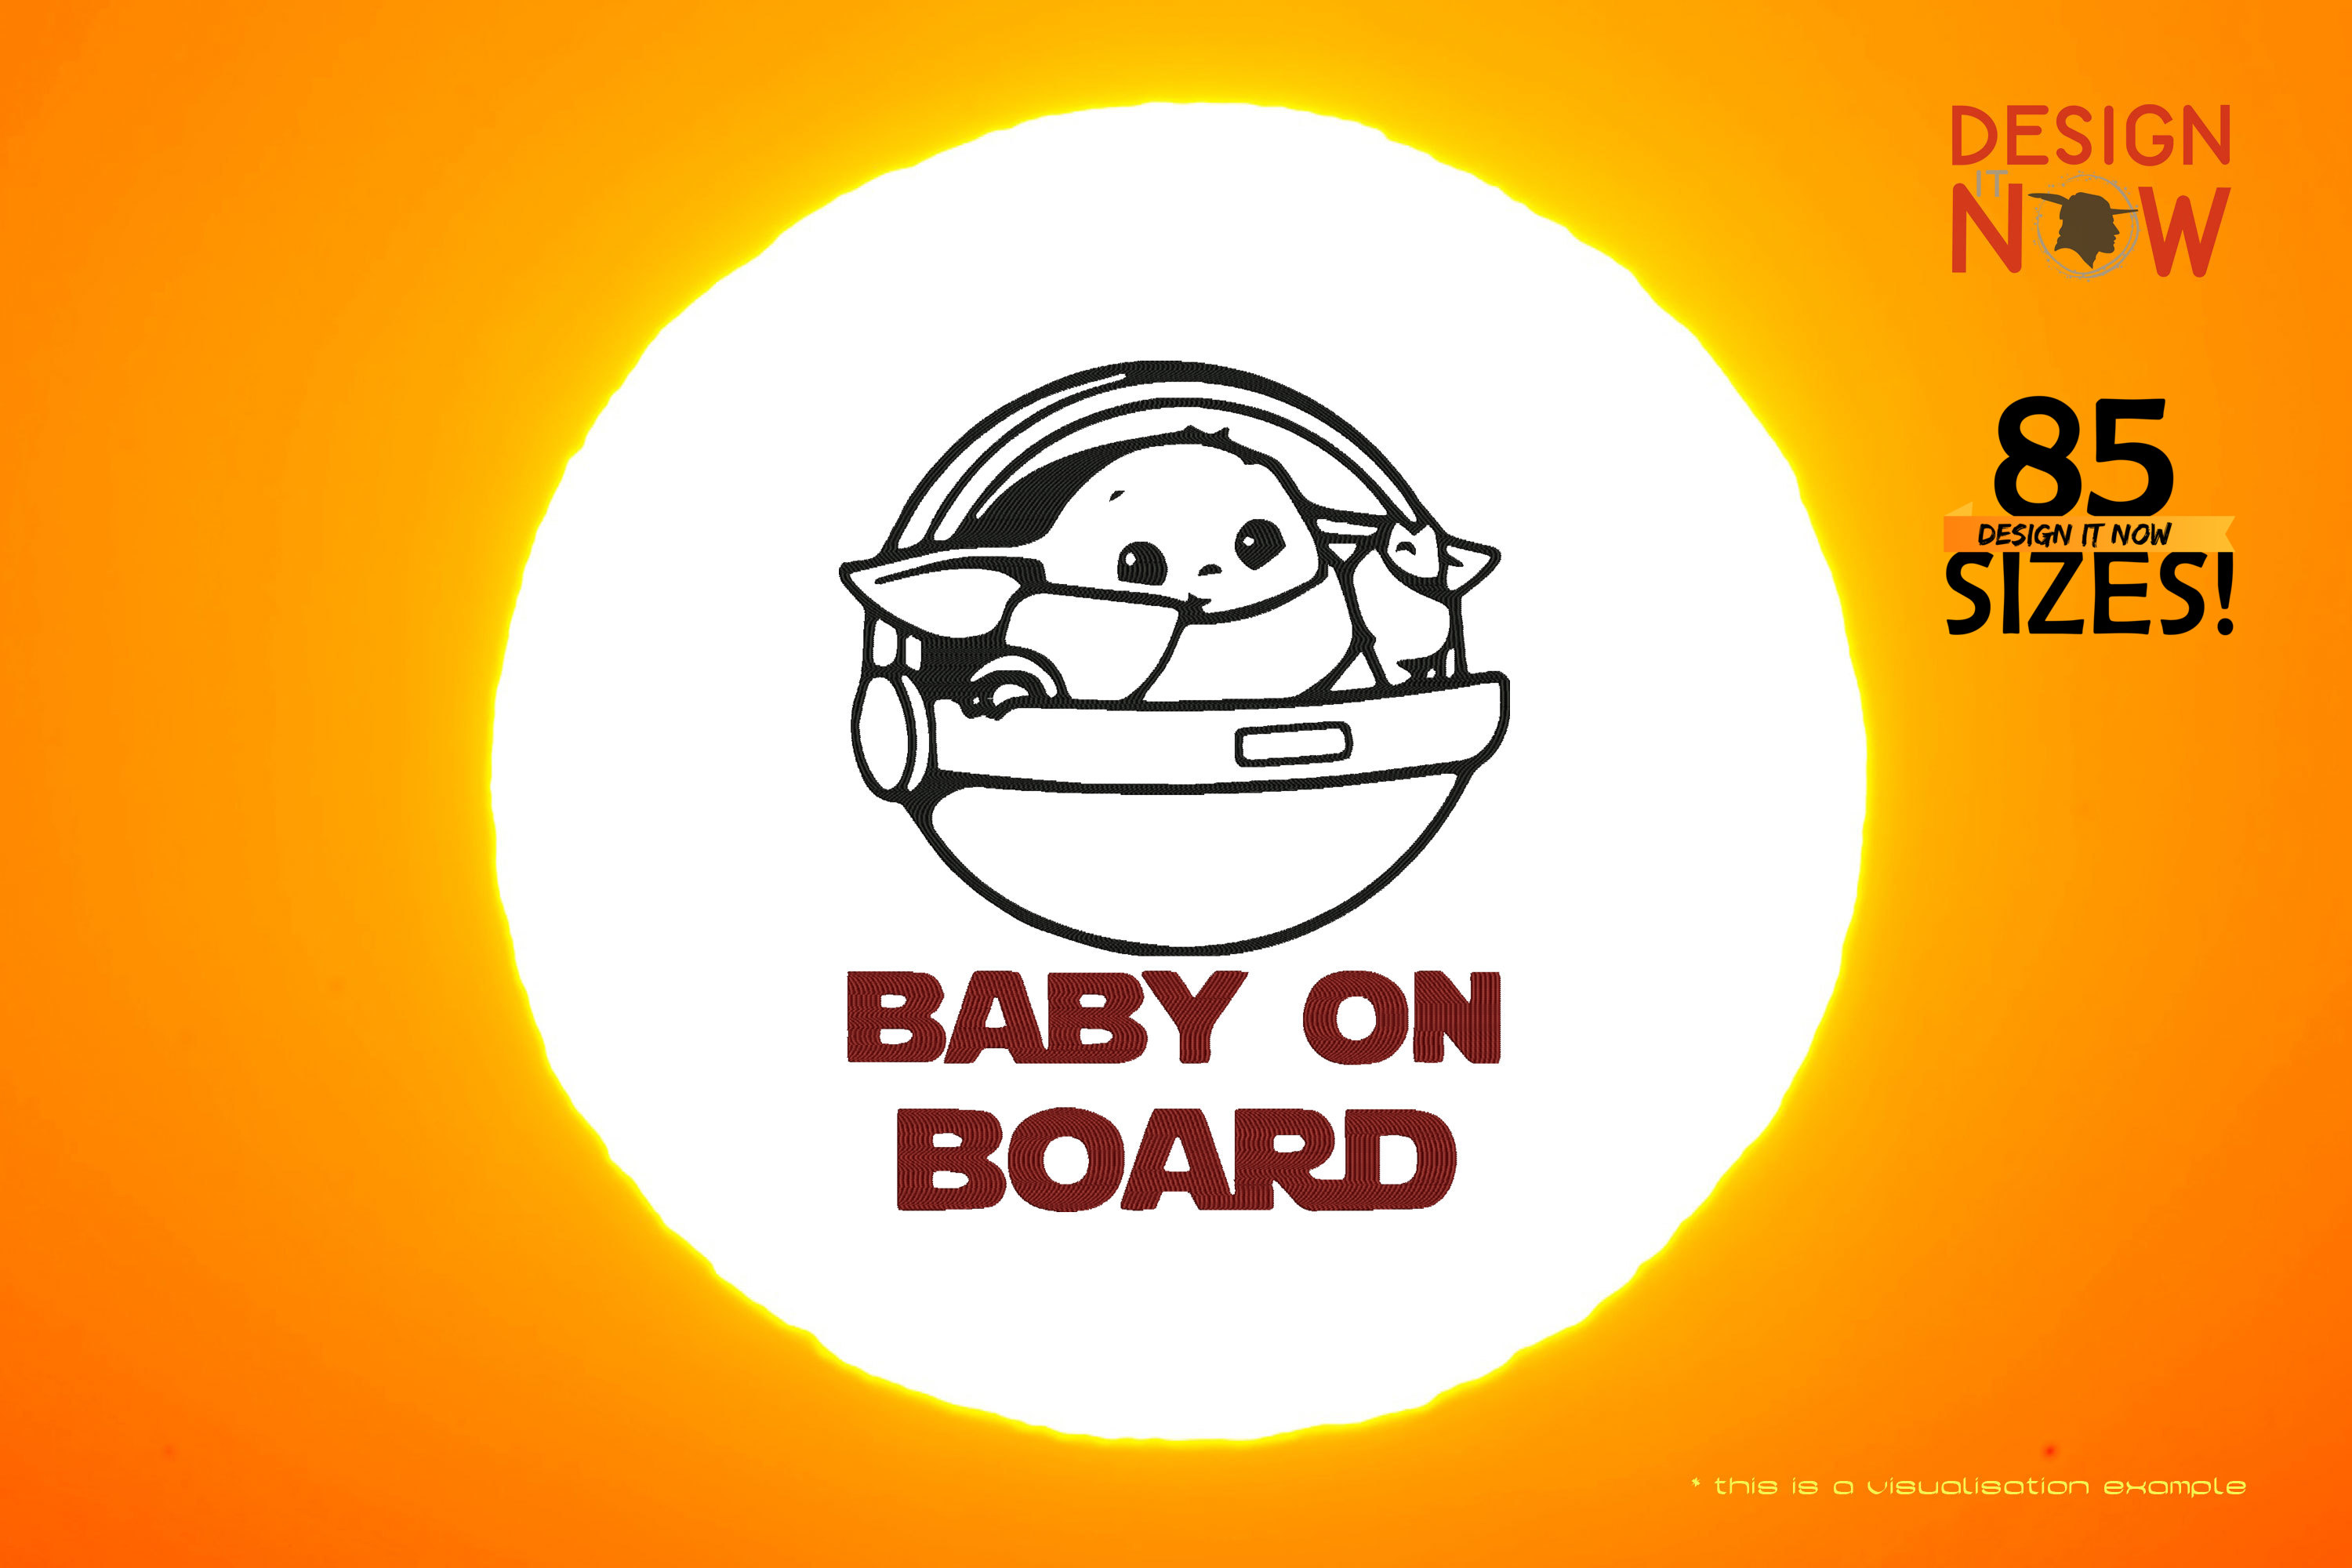 Tribute To Fictional Character Grogu aka Baby Yoda (Baby On Board)